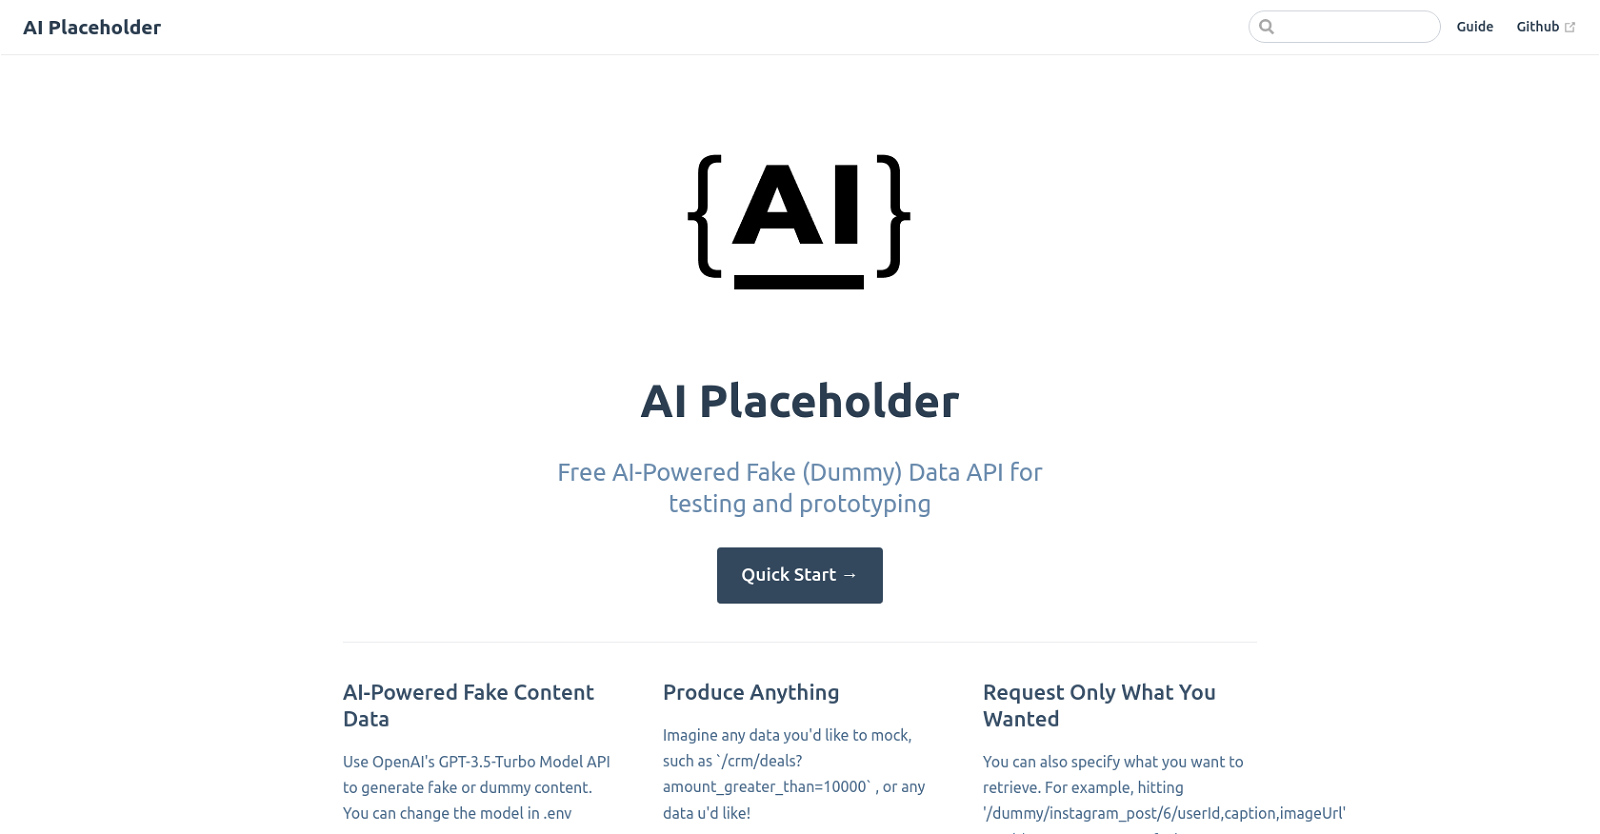 AI Placeholder